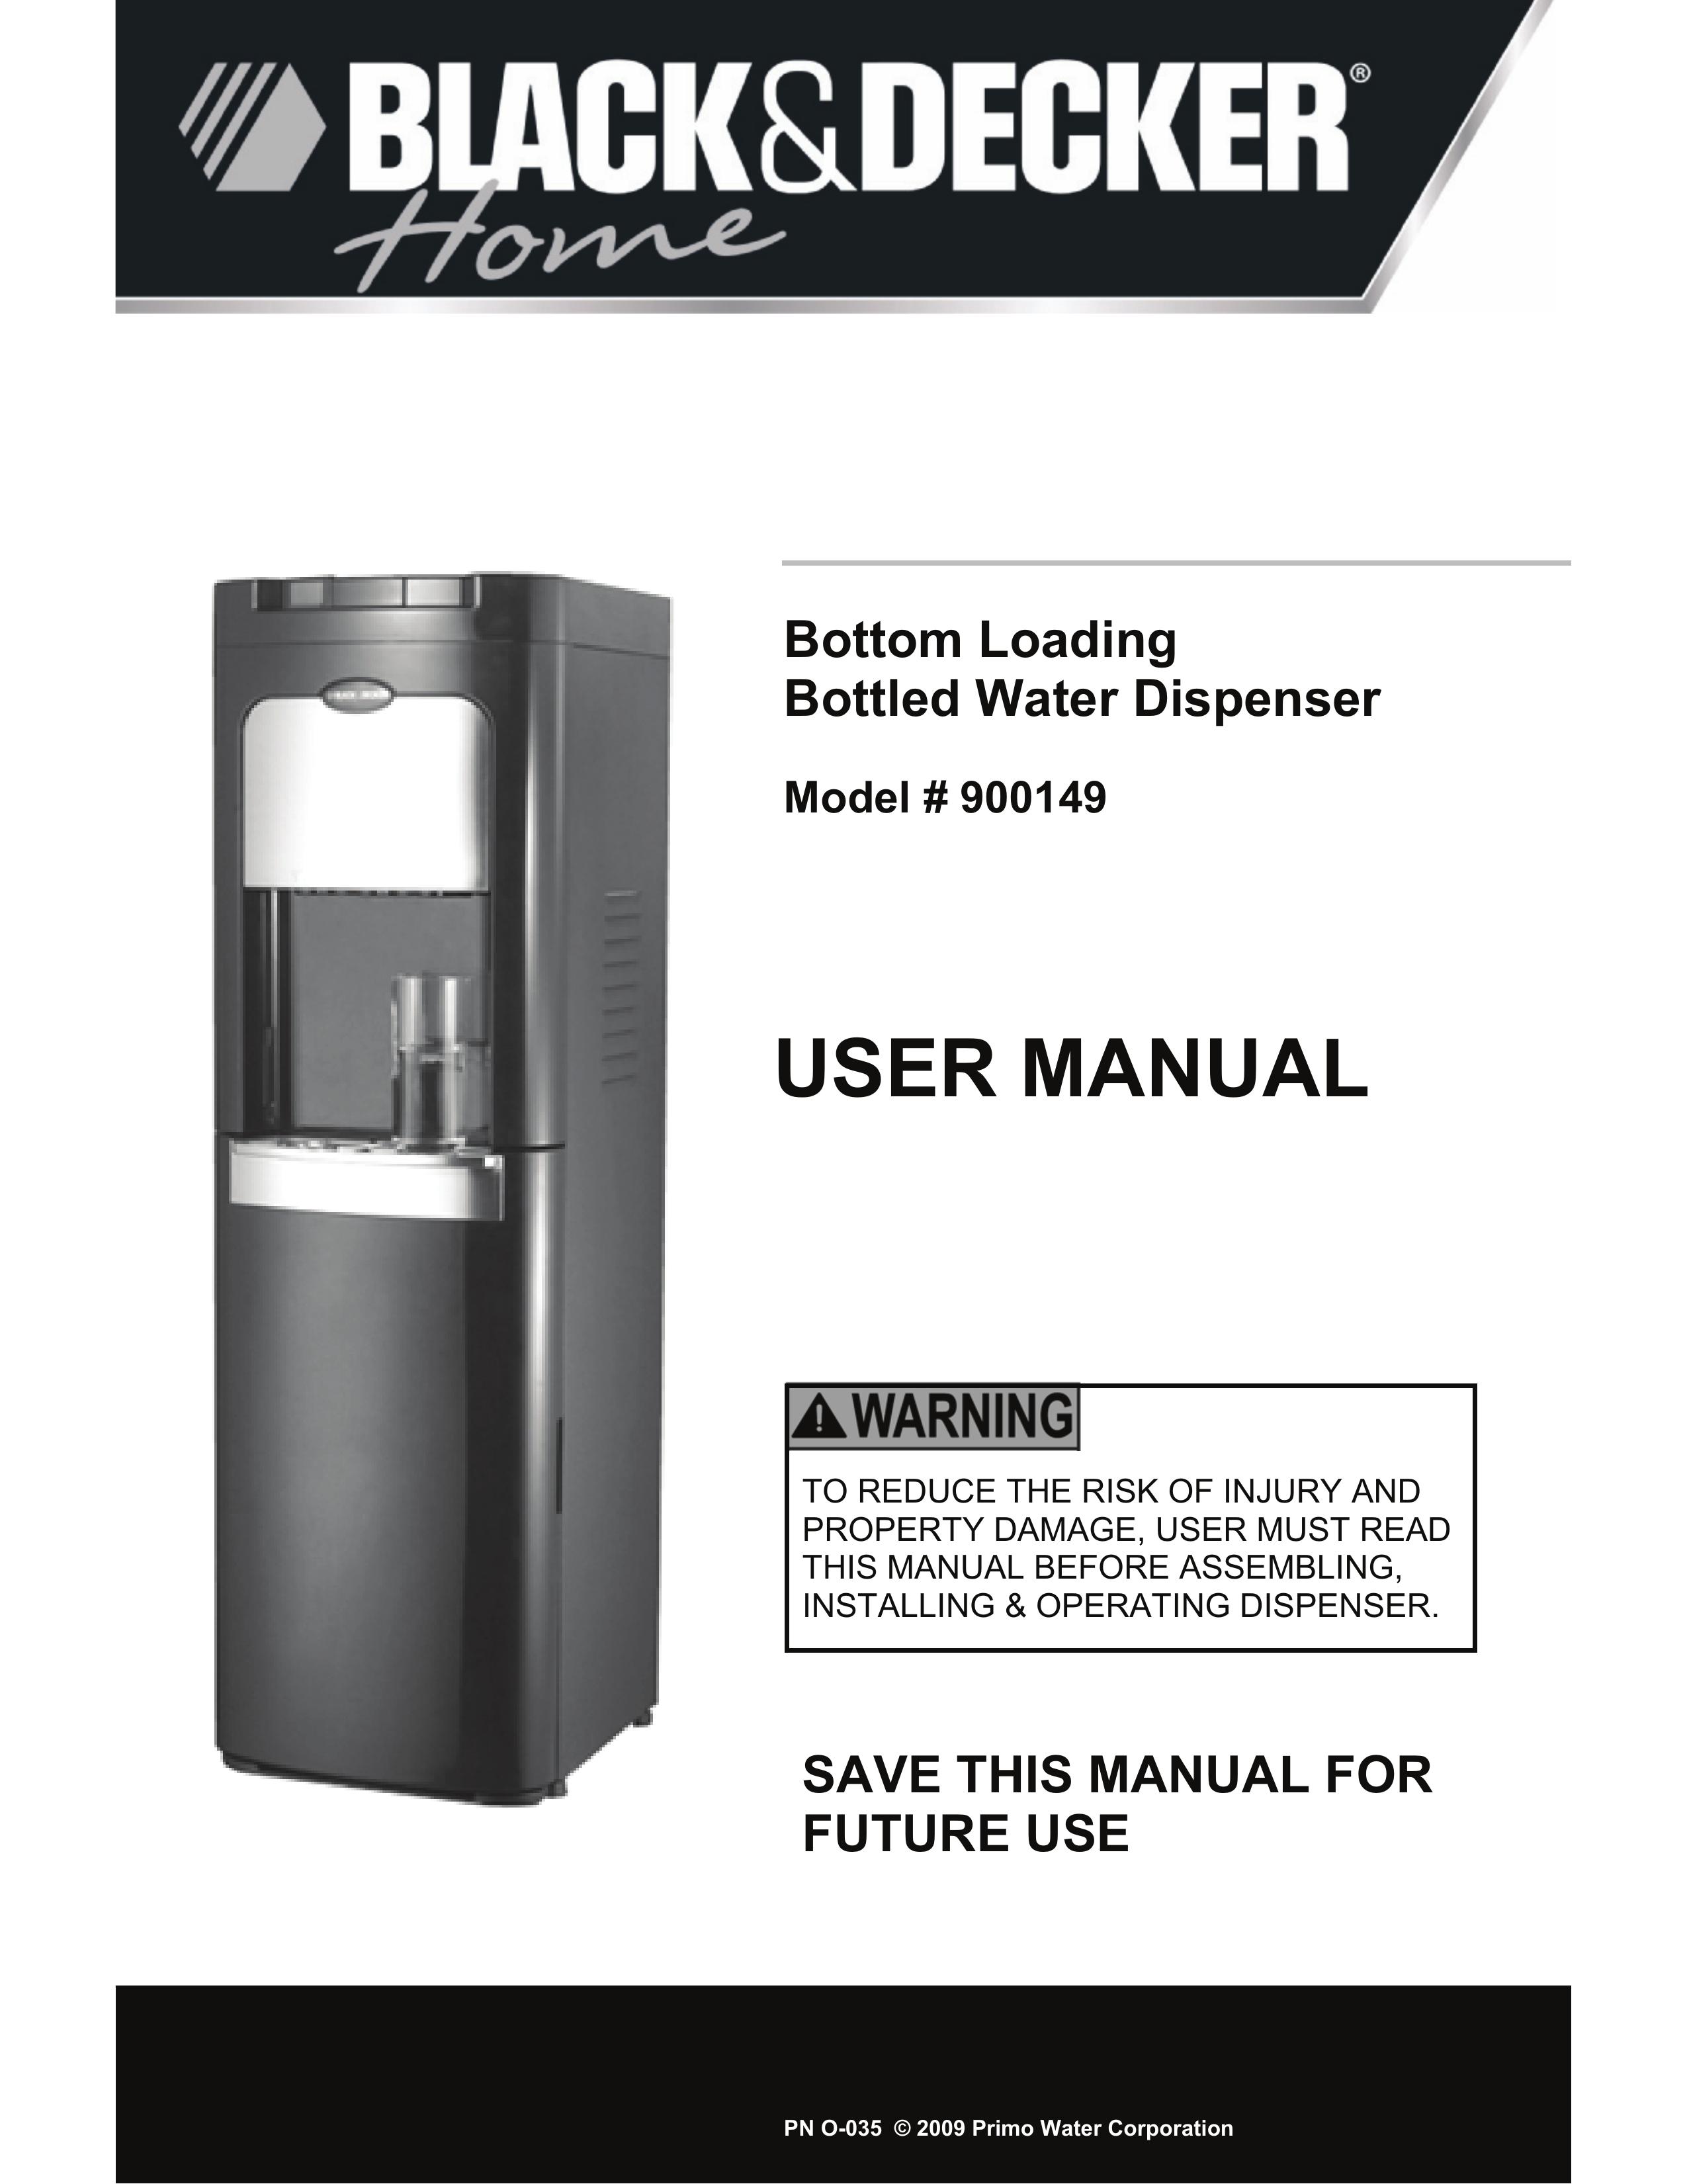 Black & Decker # 900149 Water Dispenser User Manual